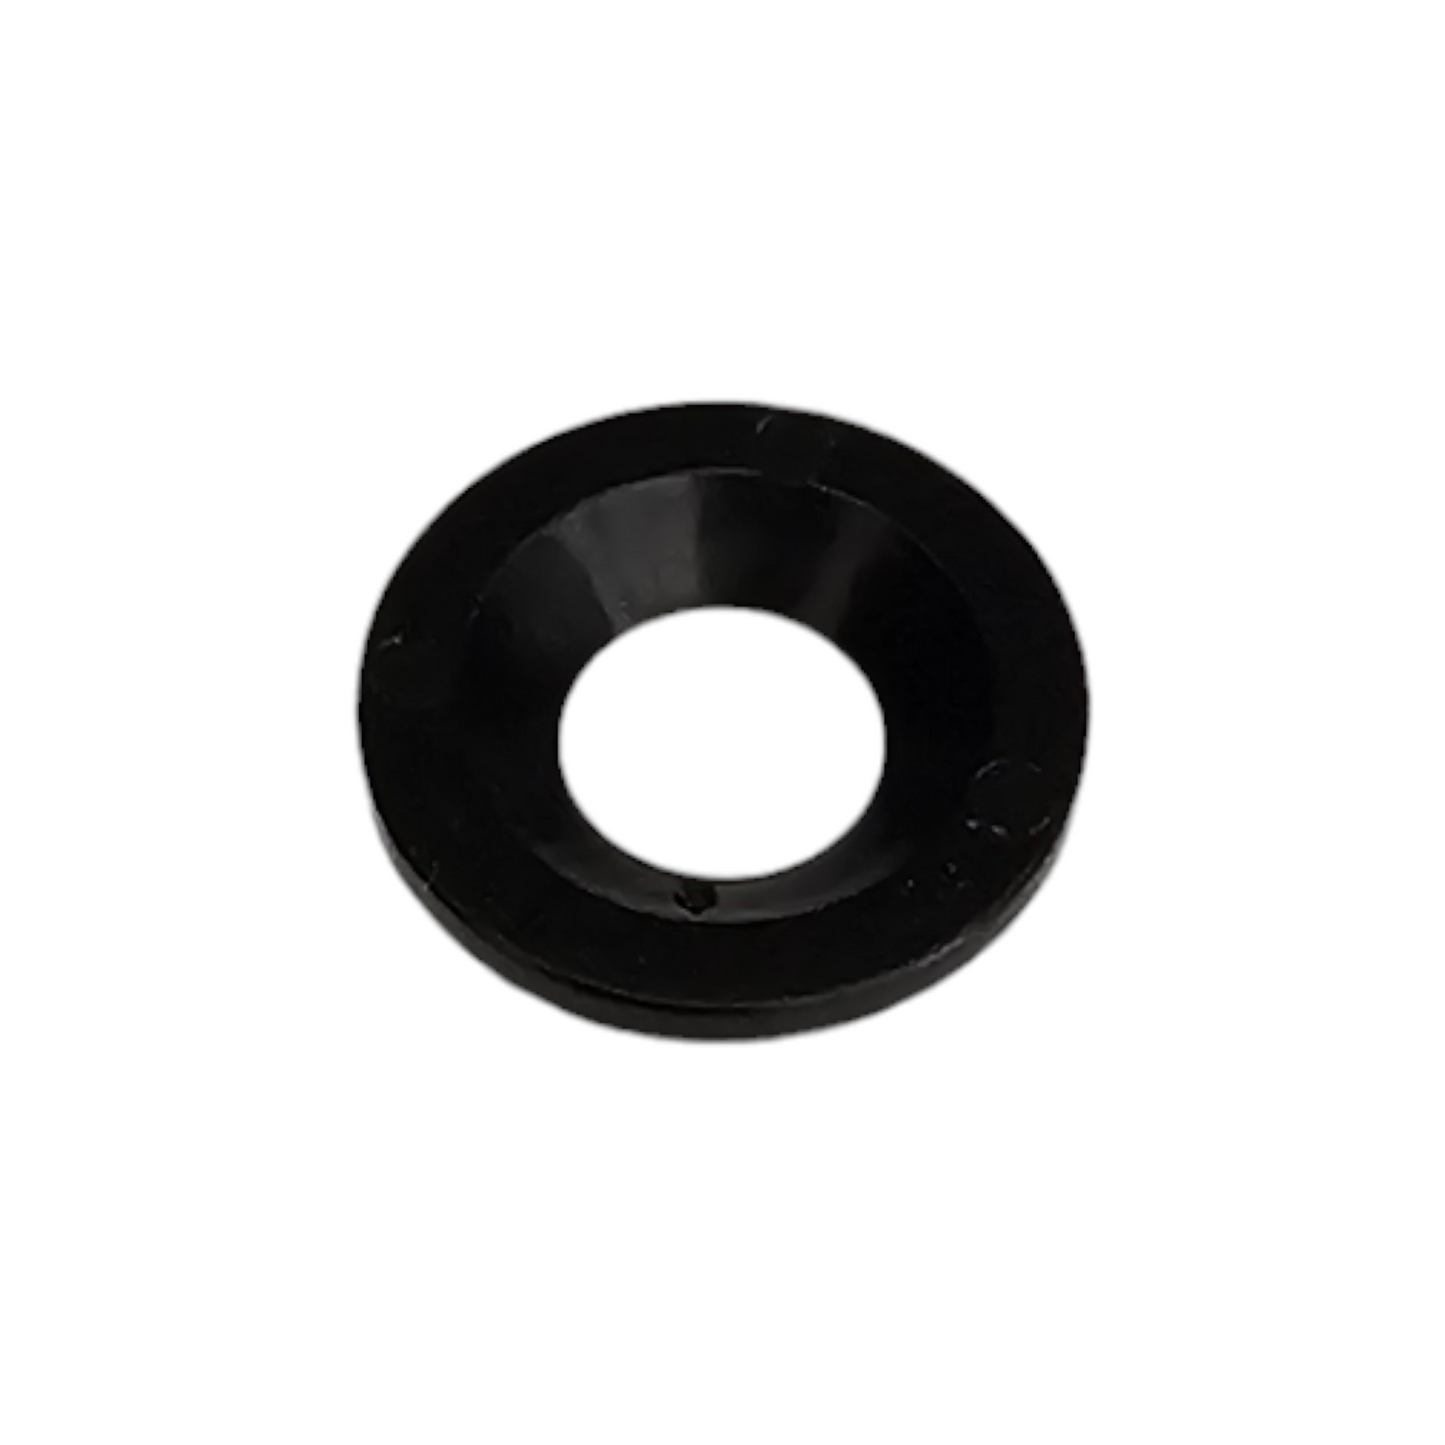 Black Plastic Gasket (Small) - Round Insert For Insnrg Acid Feeders